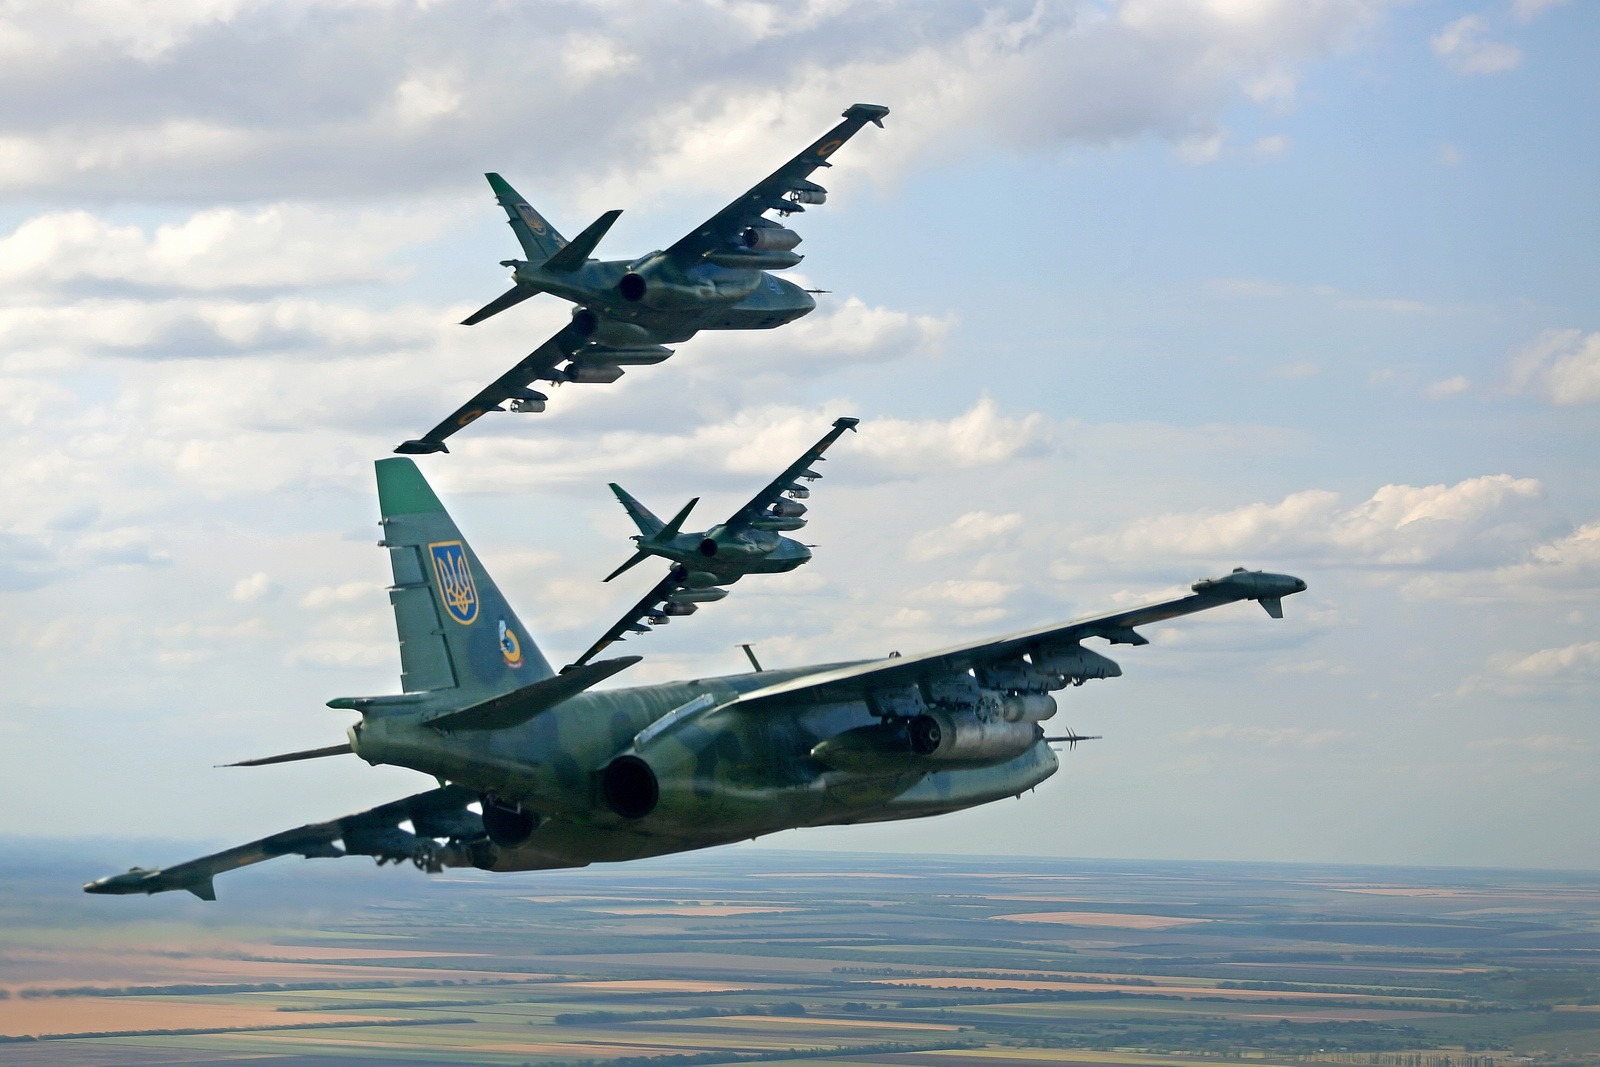 Avioane SU-25 ale Armatei Ucrainei FOTO: Skywarrior/Wikimedia Commons